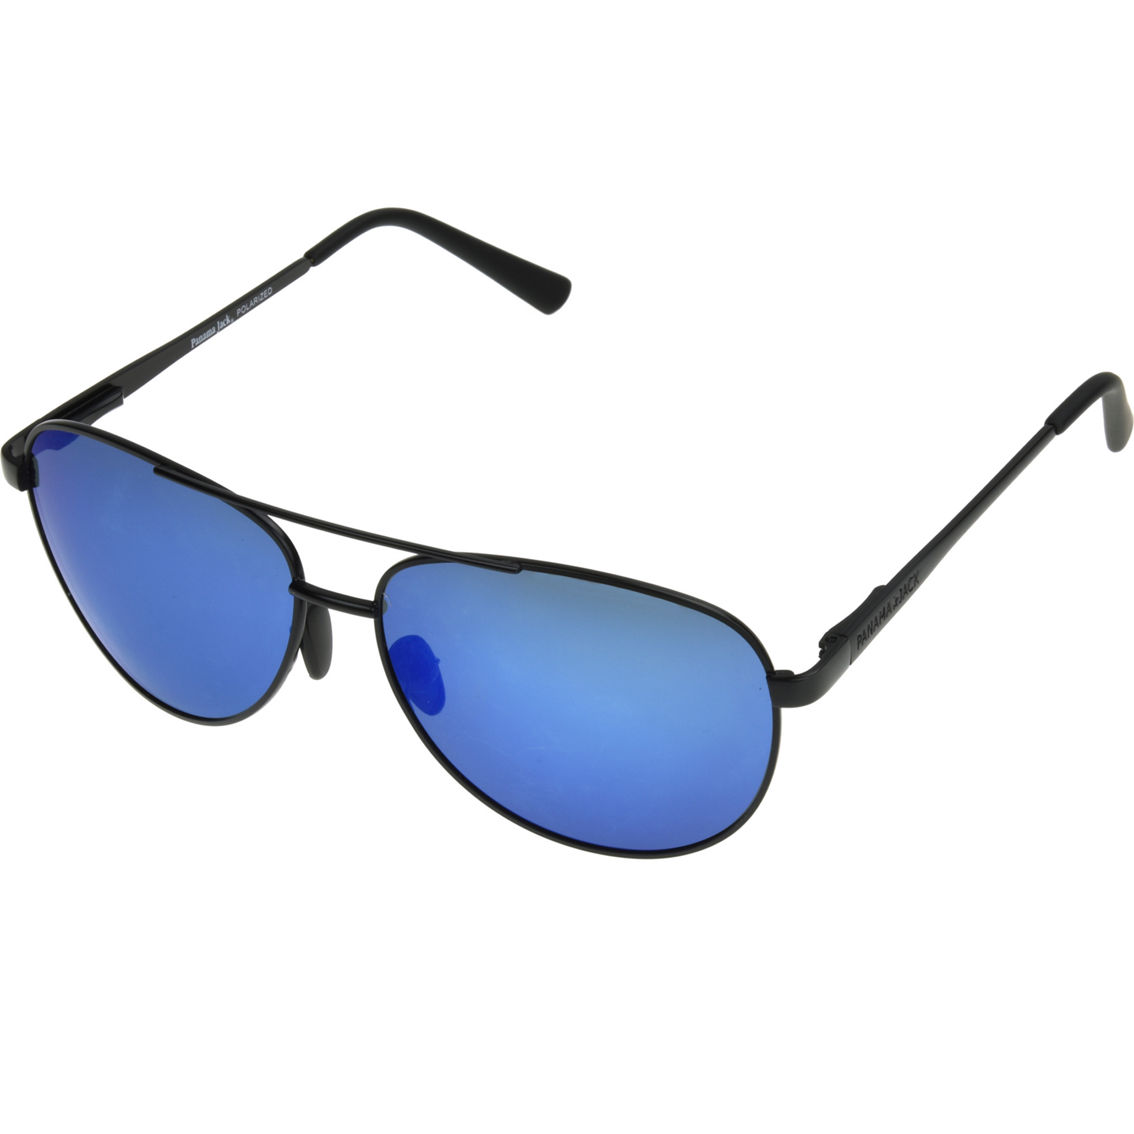 Foster Grant Panama Jack Pilot Sunglasses 10263969.cgr | Sunglasses ...